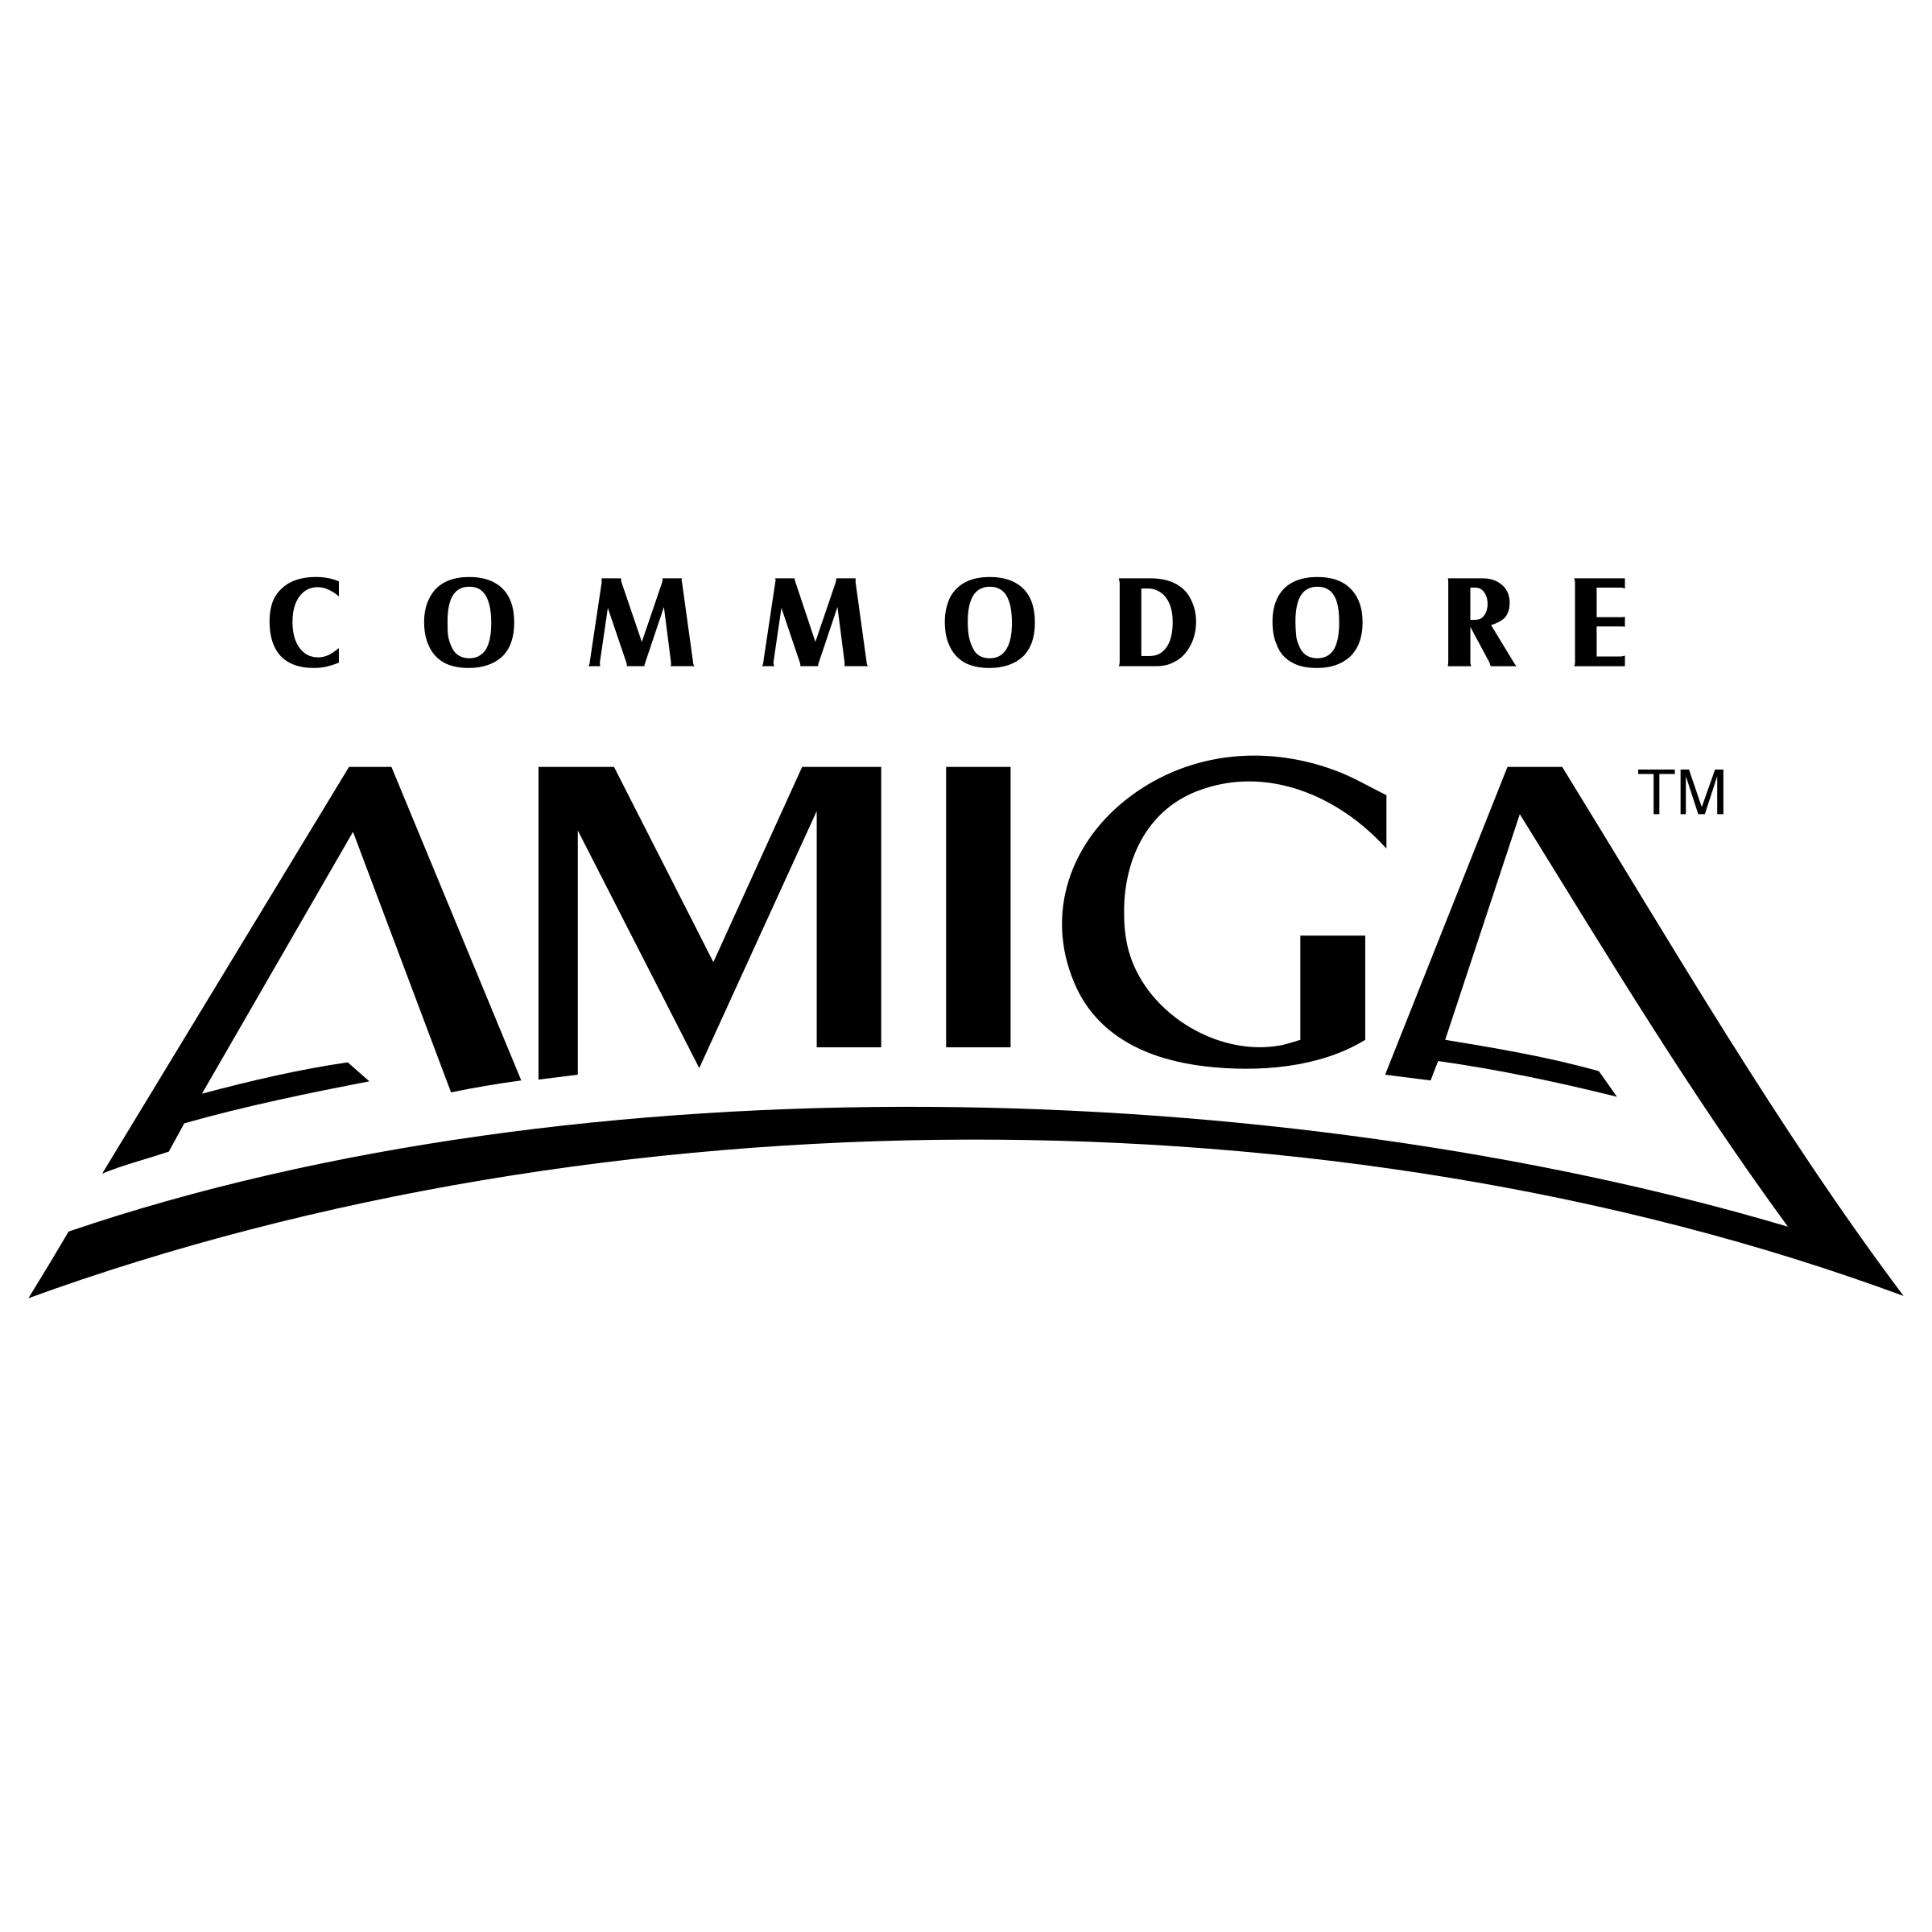 Amiga Logo - Commodore Amiga Logo PNG Transparent & SVG Vector - Freebie Supply